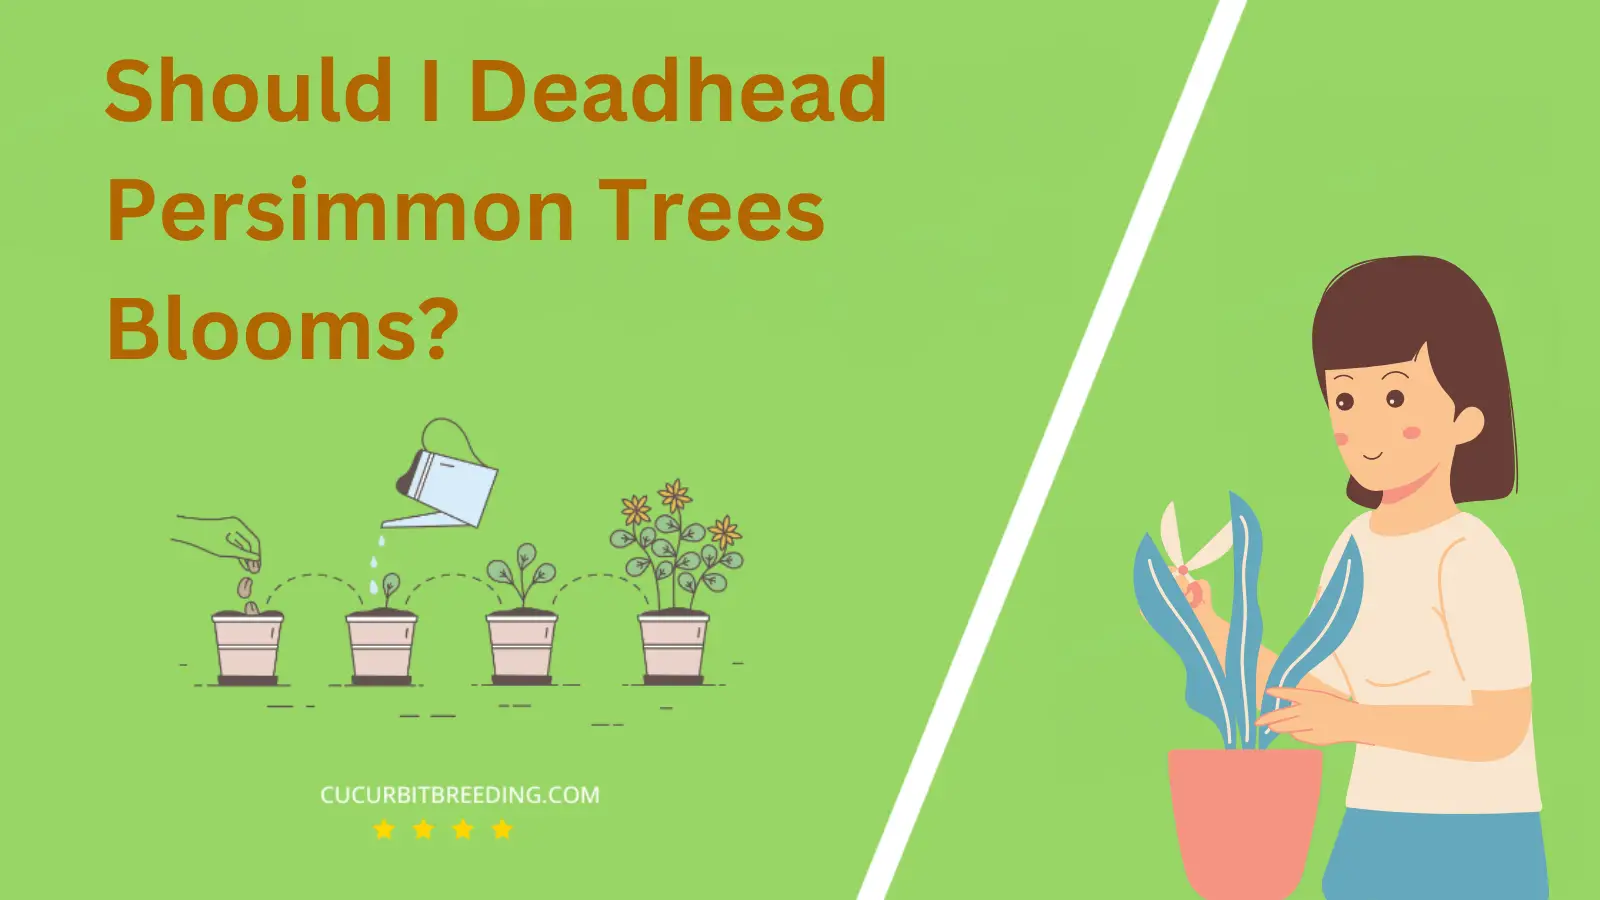 Should I Deadhead Persimmon Trees Blooms?